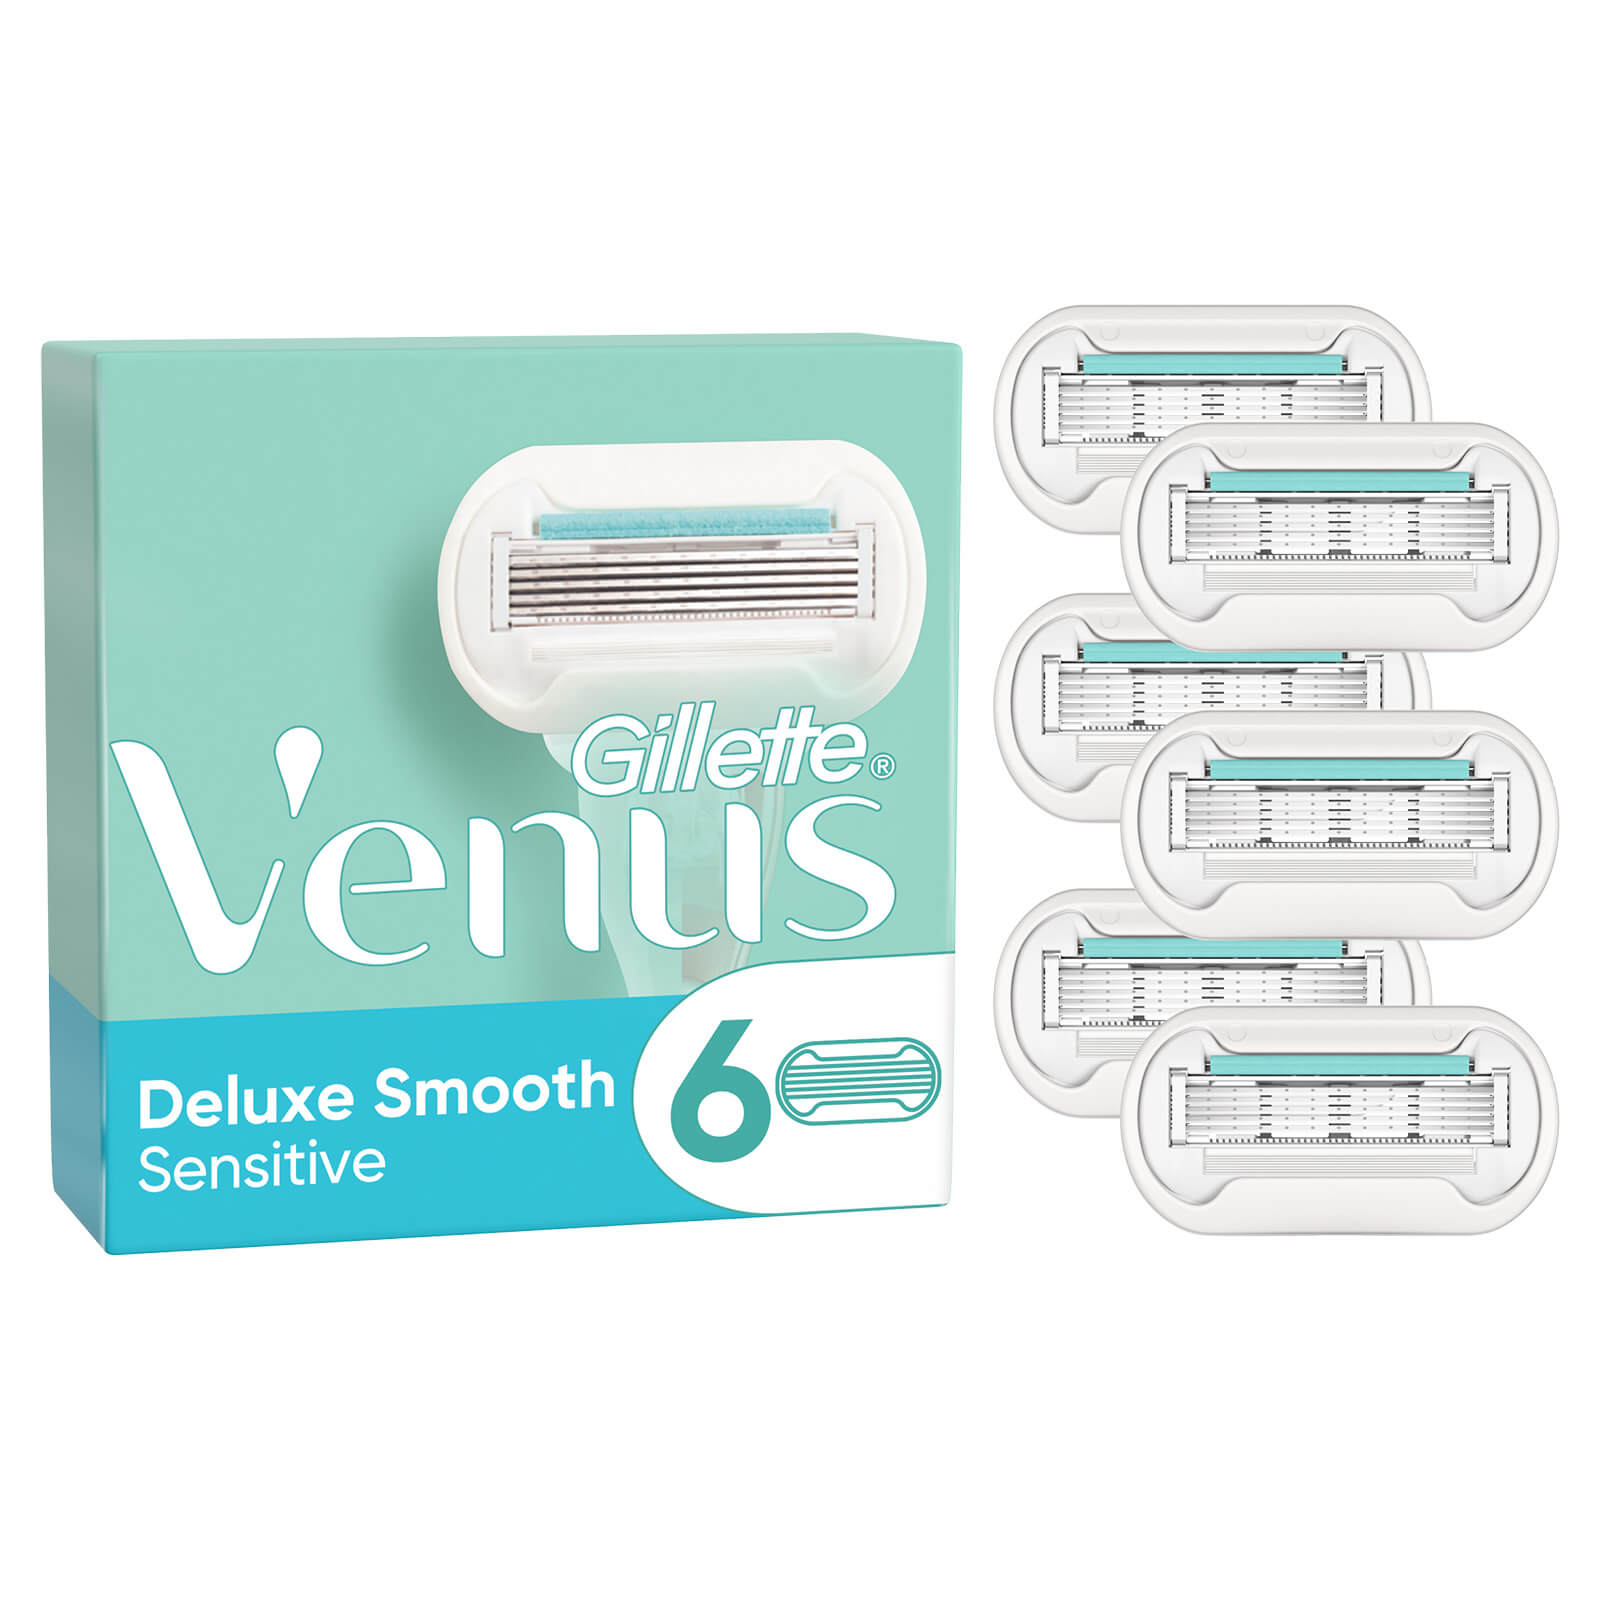 Venus Deluxe Smooth Sensitive Blades - 6 Pack